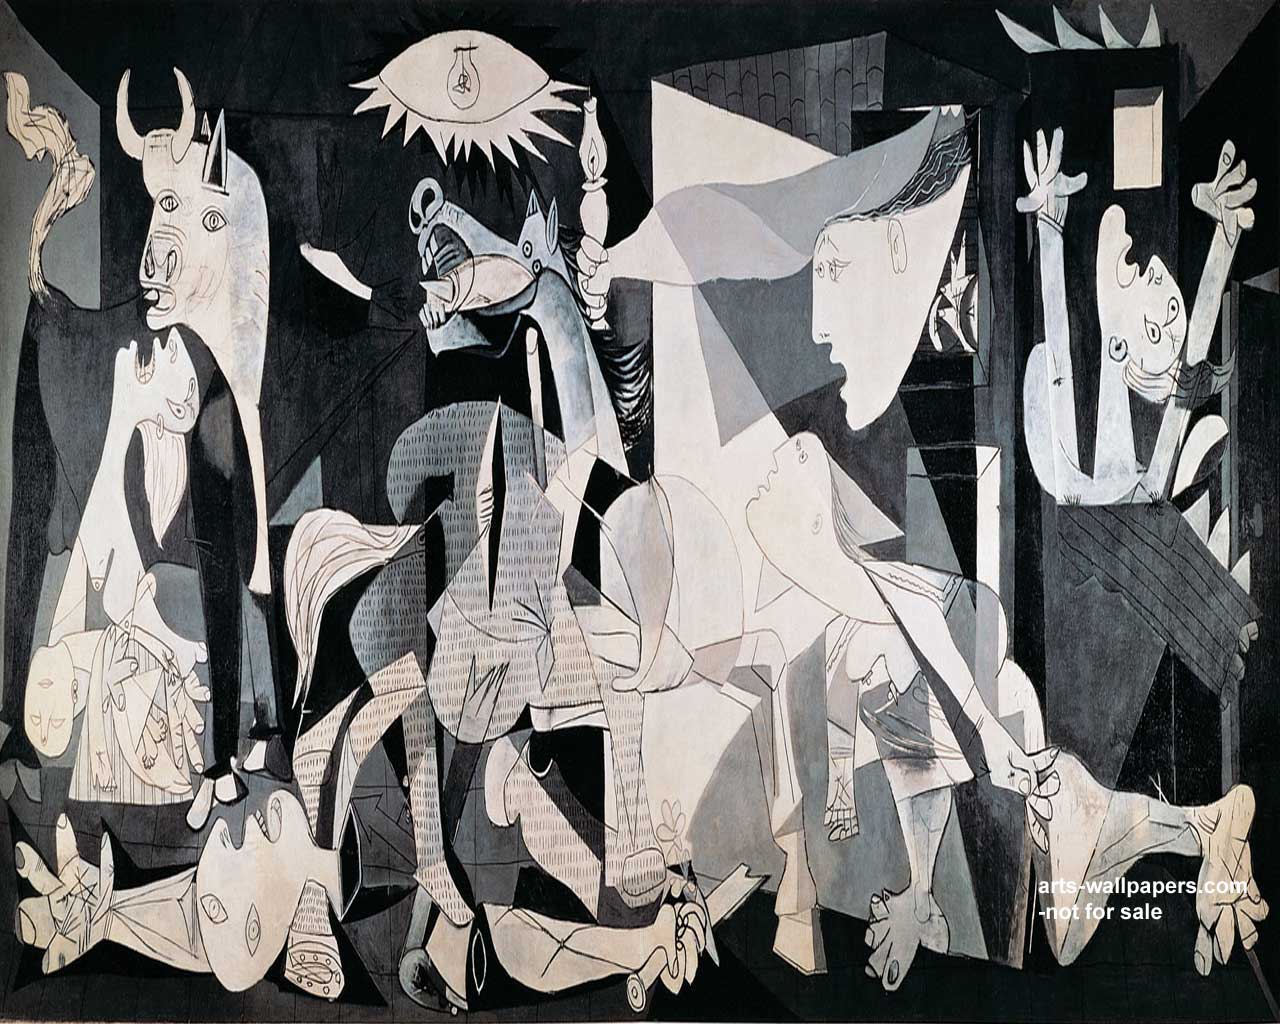 Guernica Wallpaper, Guernica Poster, Guernica, c.1937 Pablo Picasso